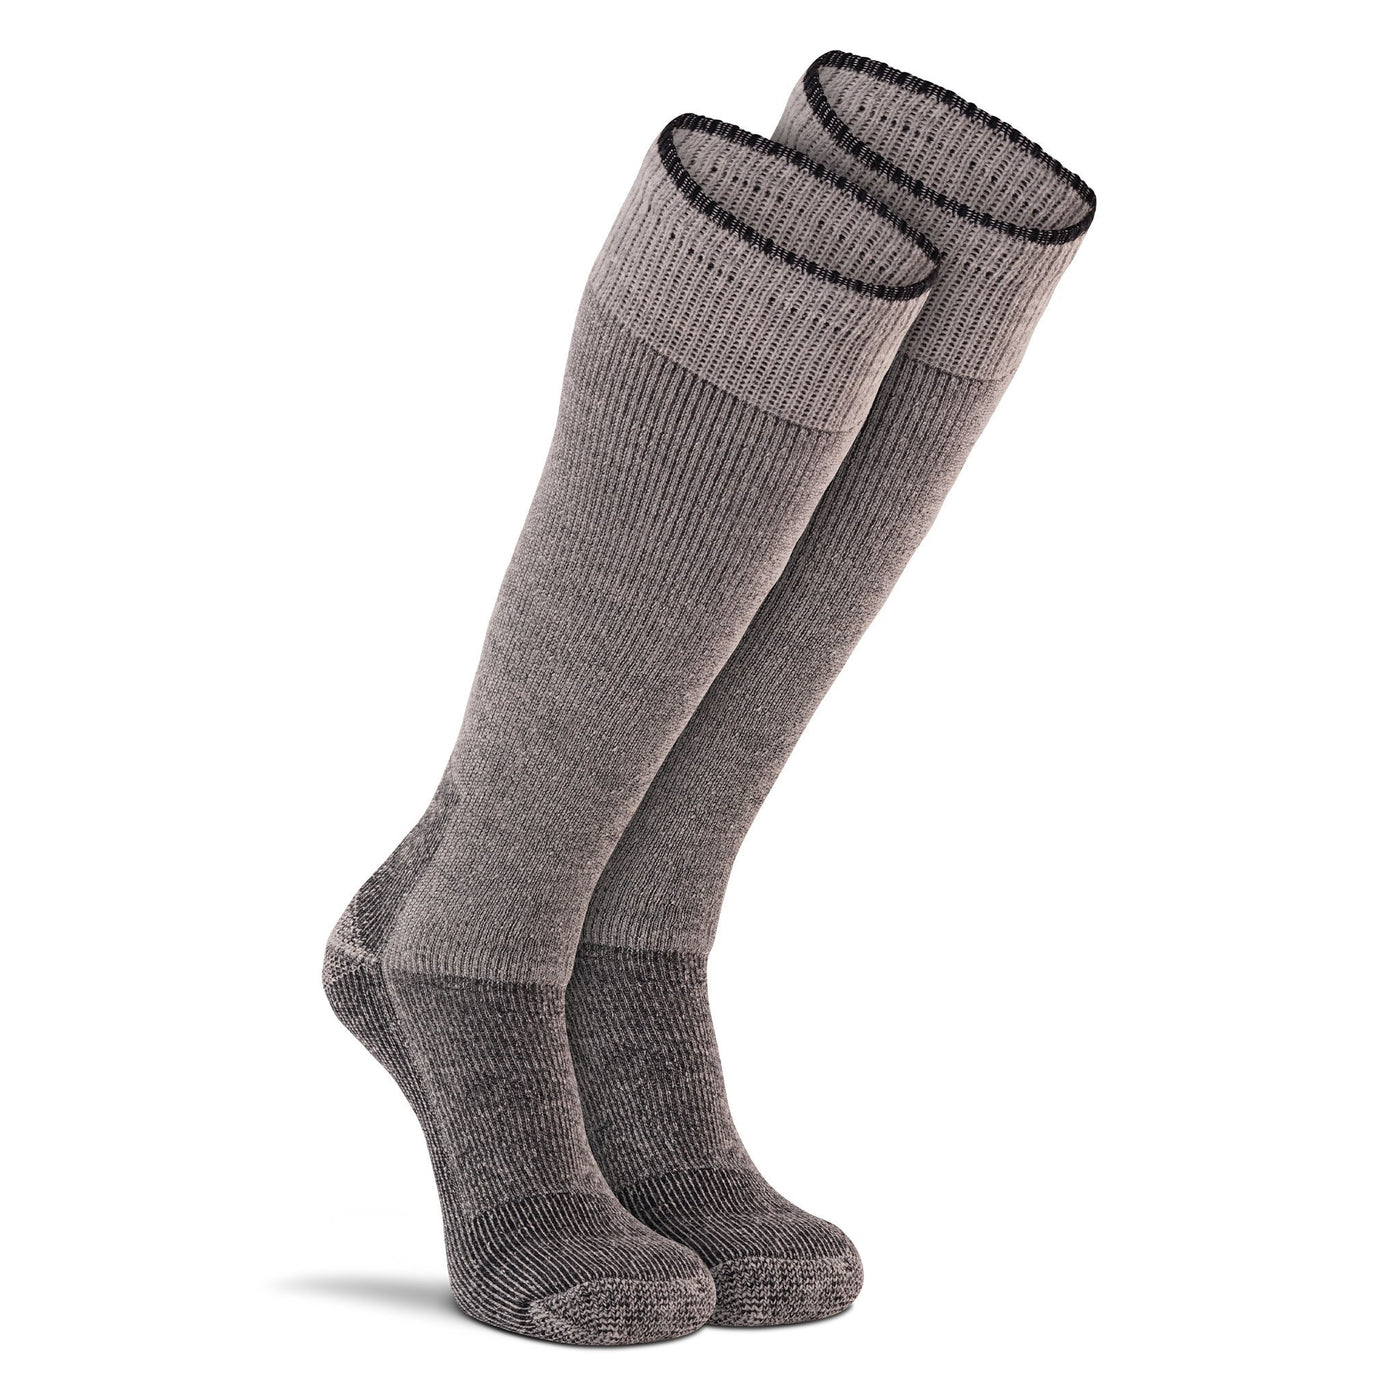 Wool Work Heavyweight Mid-Calf Boot - 2 Pack Grey Medium - Fox River® Socks